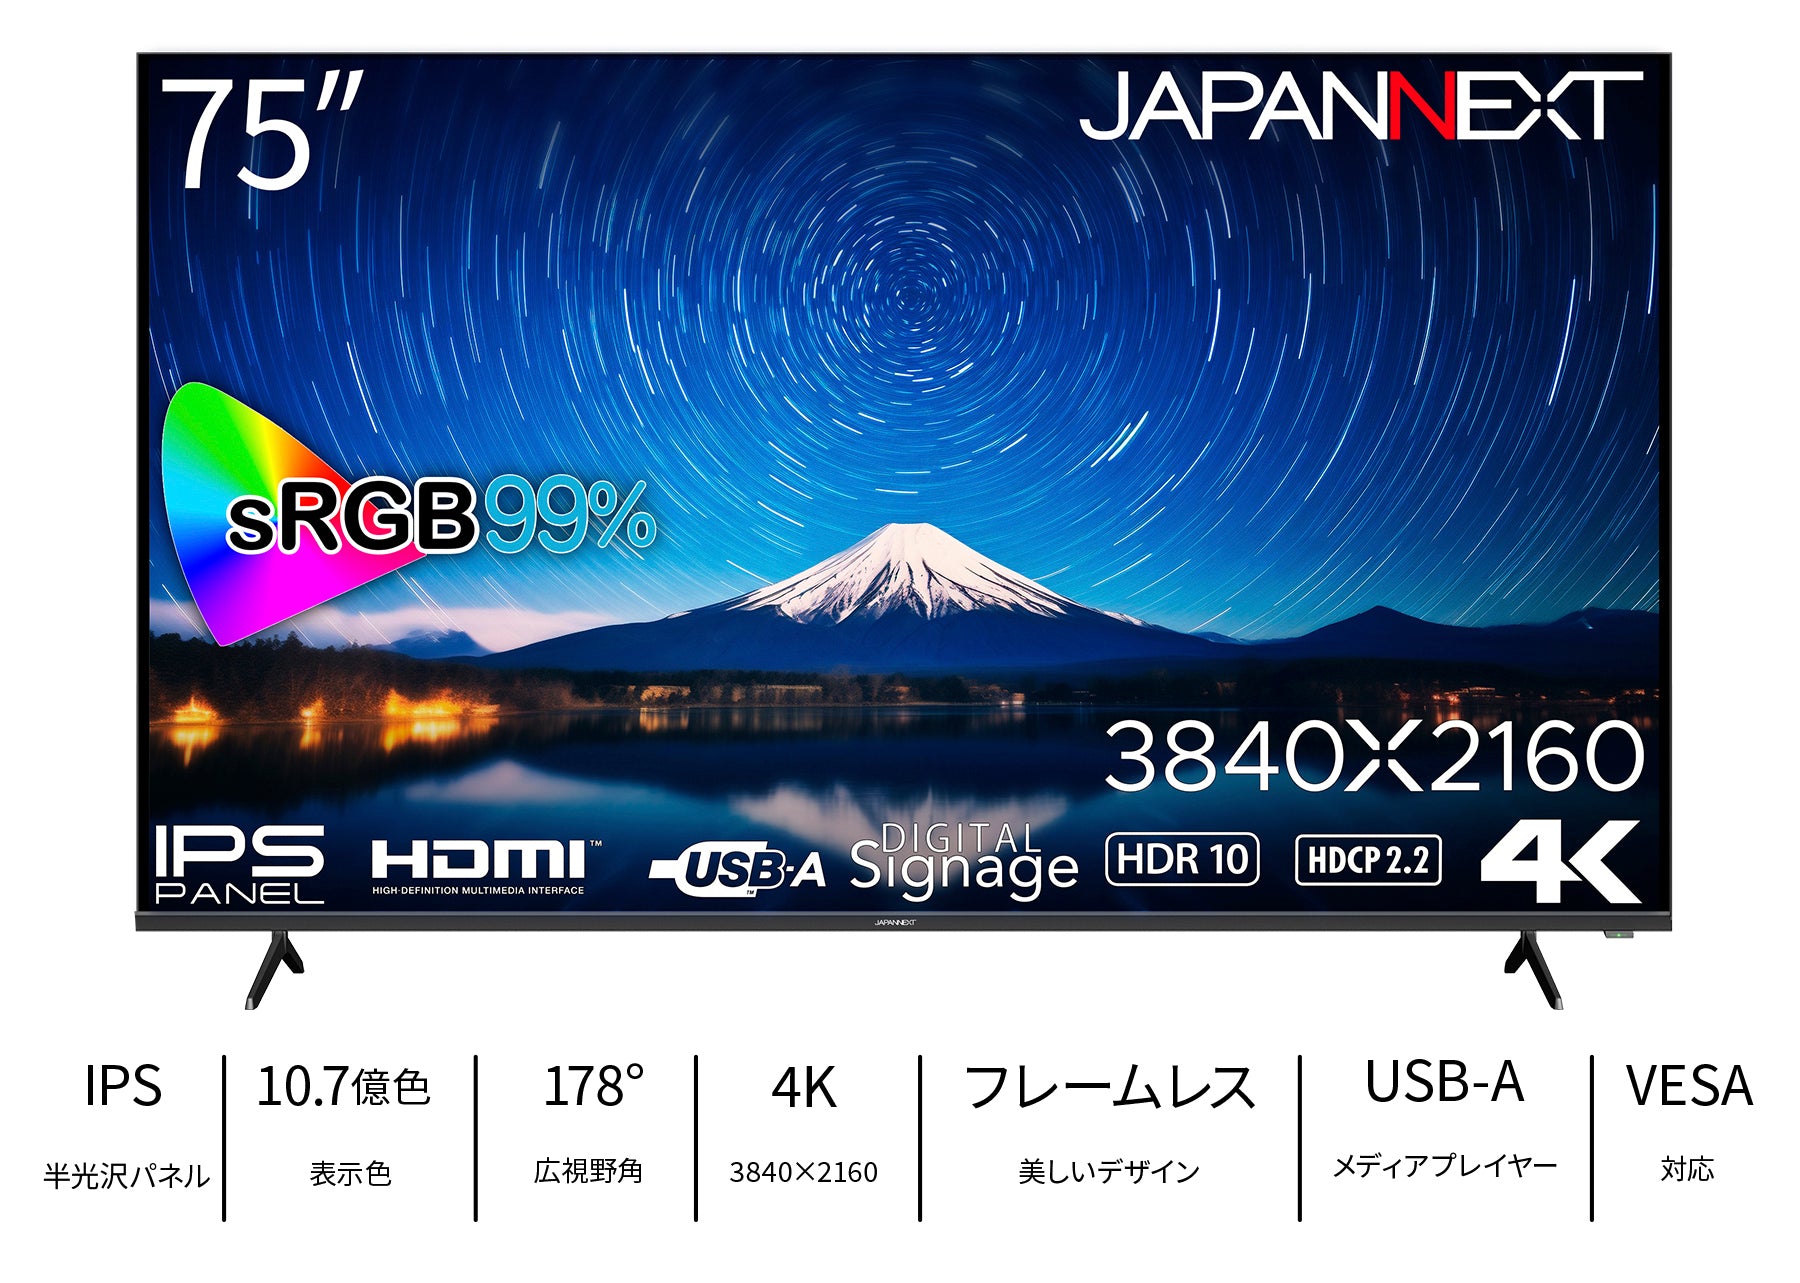 JAPANNEXT 75インチ IPSパネル搭載 大型4K液晶モニター JN-IPS7500UHDR